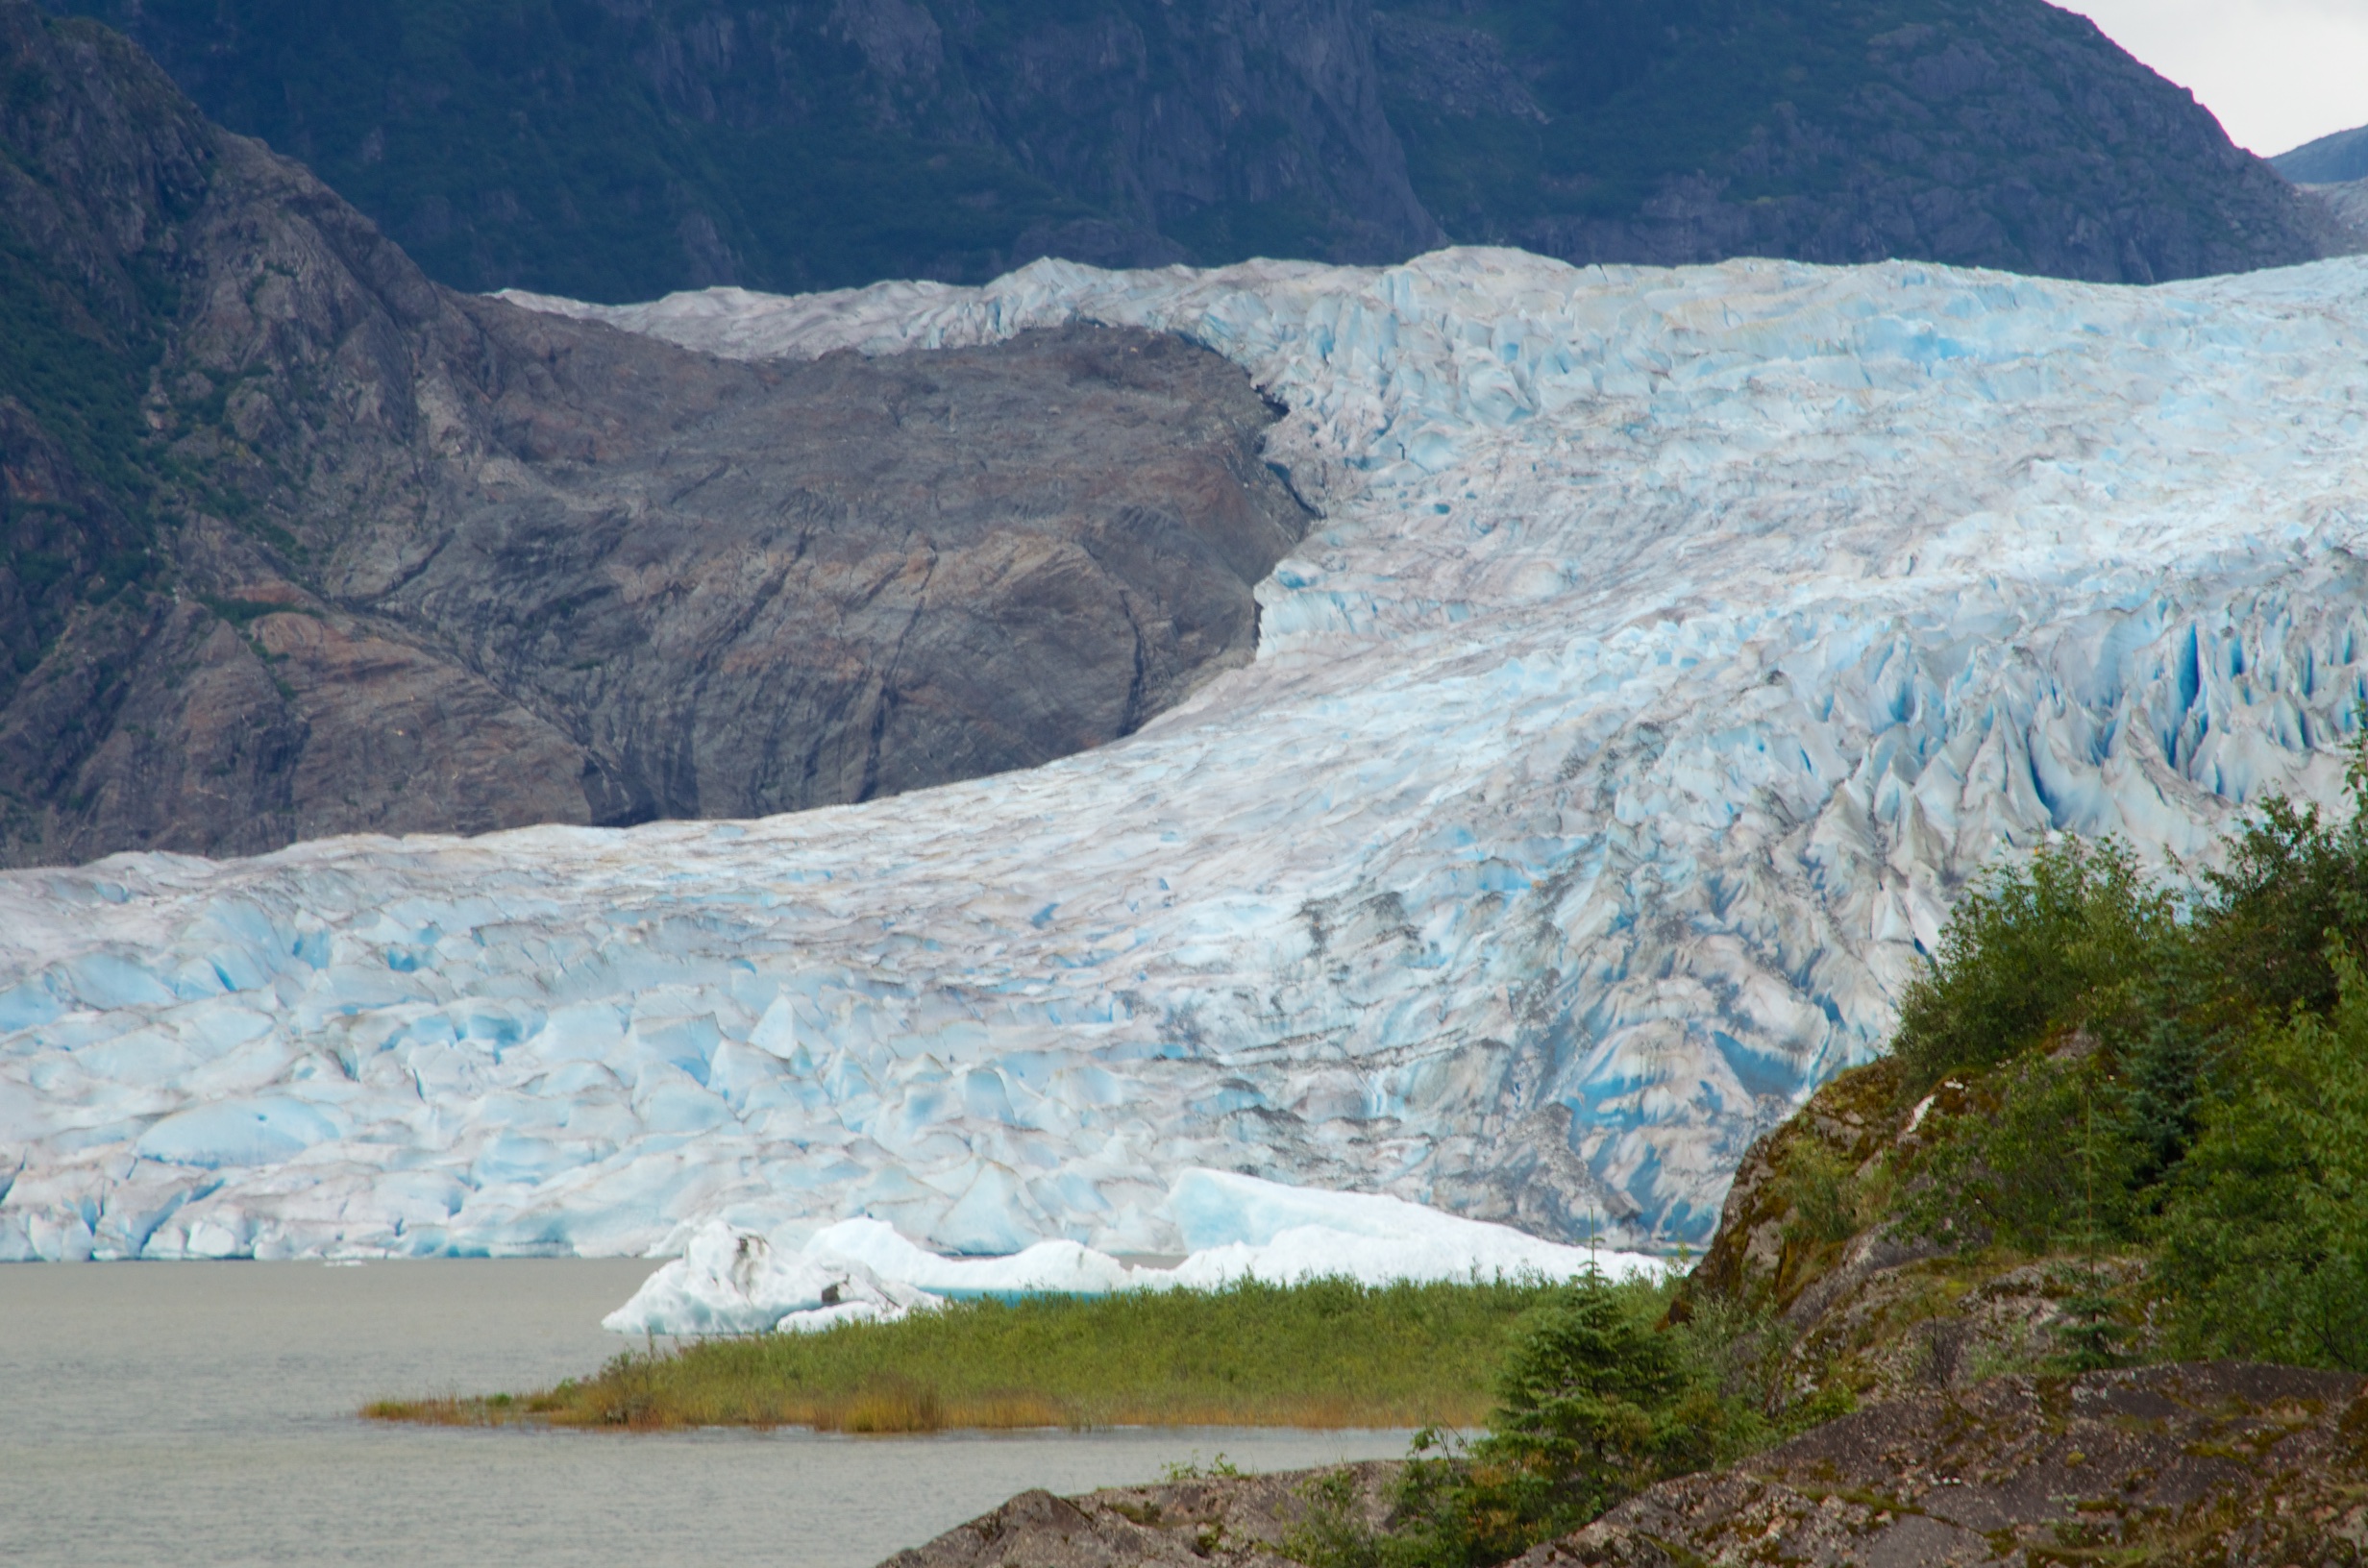  Mendenhall Glacier, Juneau, Alaska 